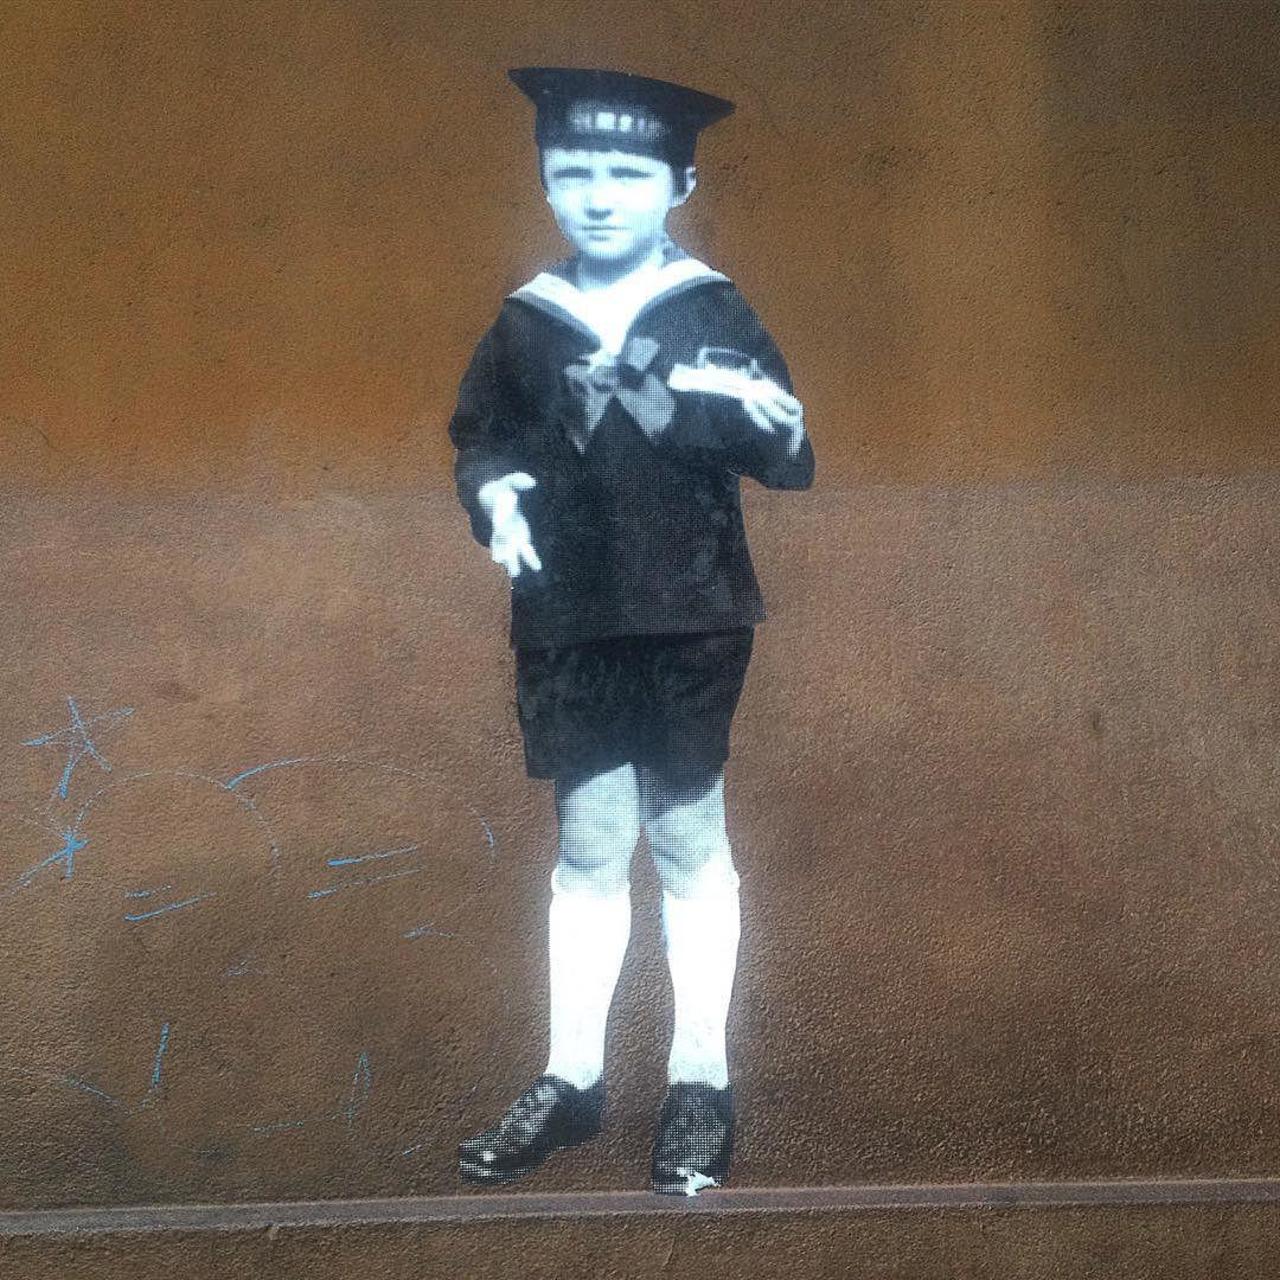 #Paris #graffiti photo by @mh2p_ http://ift.tt/1VuUuzj #StreetArt http://t.co/5nf1ZzSkO1